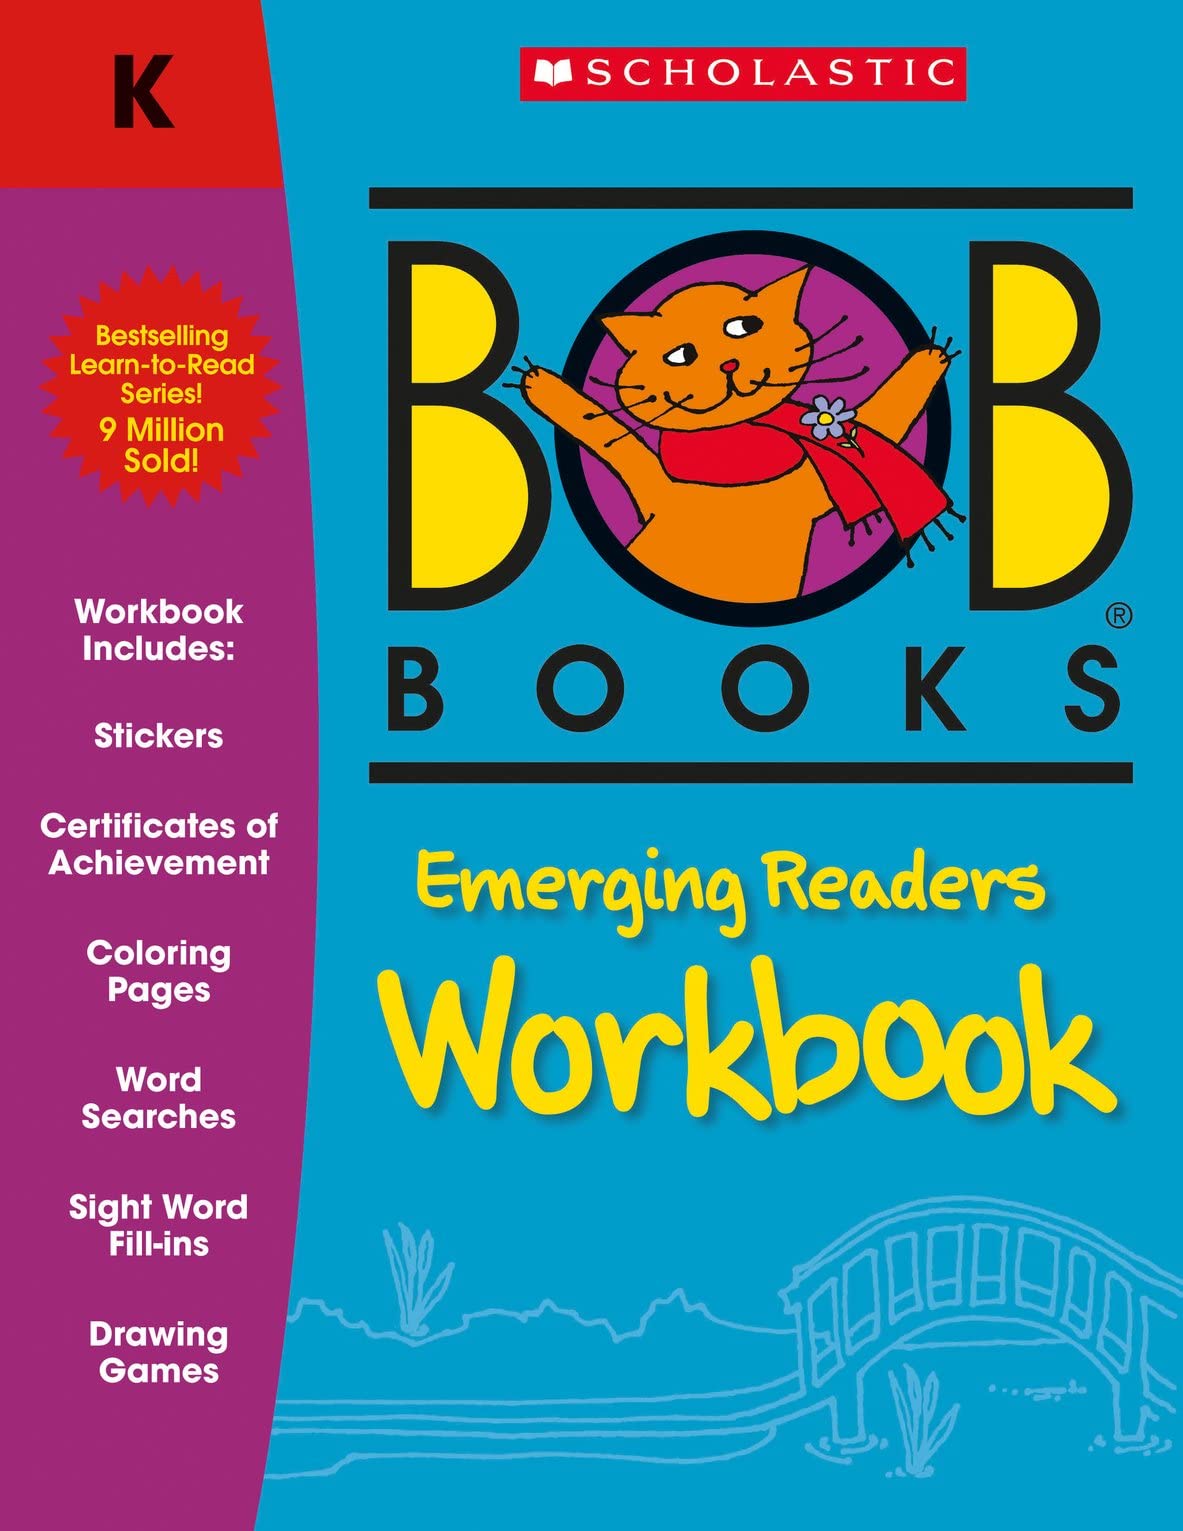 BOB Books: Emerging Readers Workbook